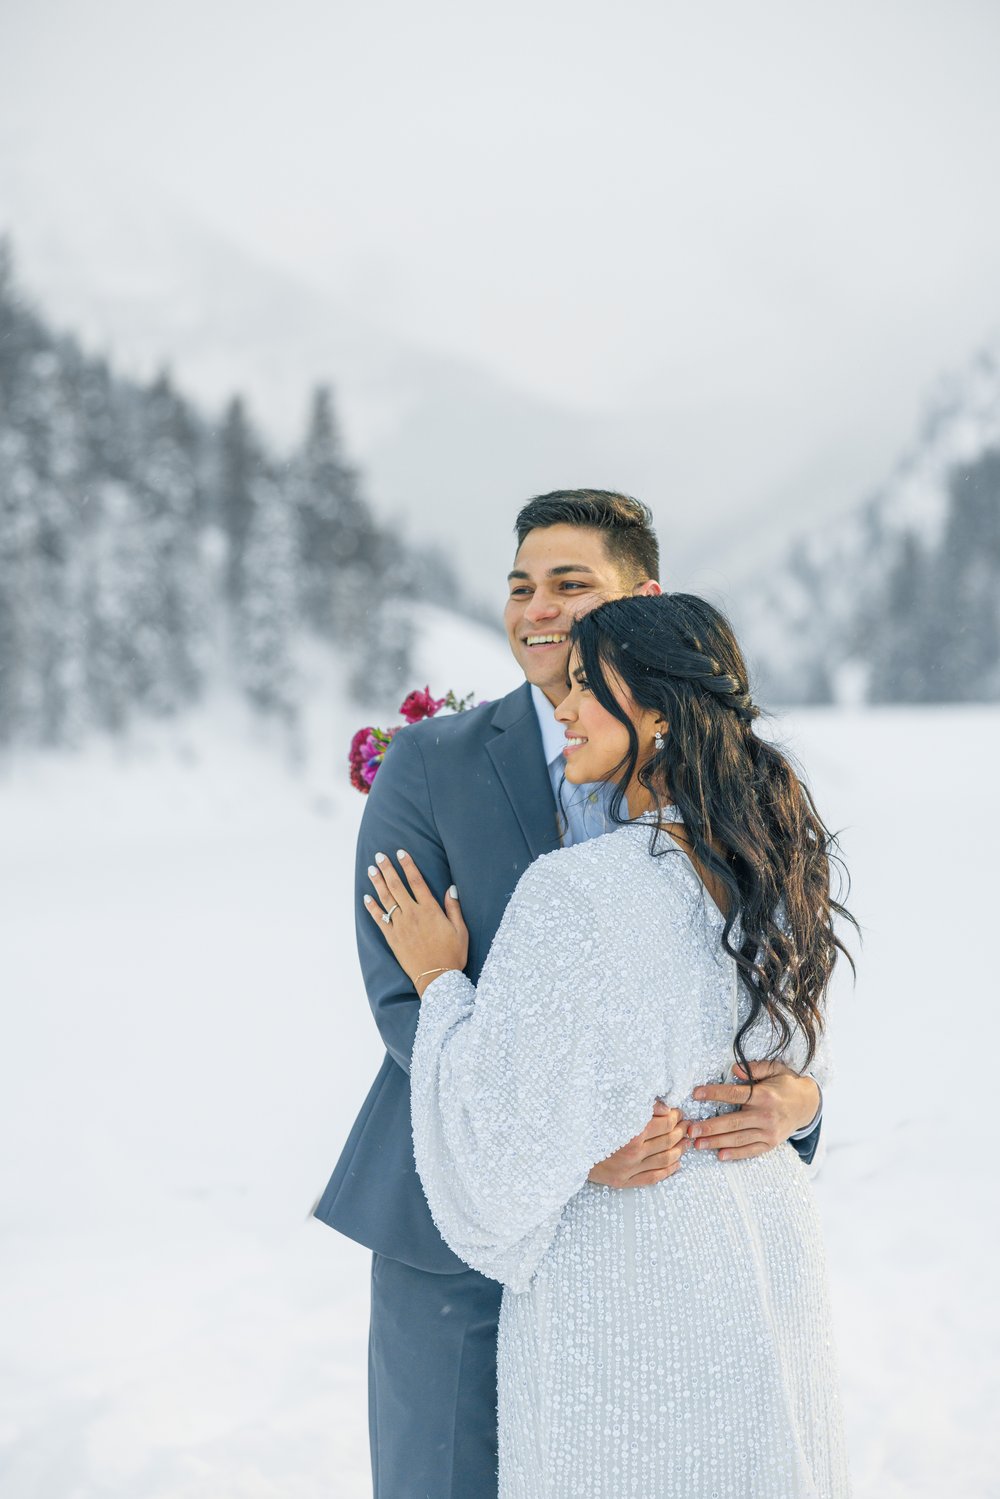  Professional bridal photographer Savanna Richardson Photography captures hugging newlyweds in the snow. Snow bride #SavannaRichardsonPhotography #SavannaRichardsonBridals #WinterBridals #WinterWedding #TibbleForkBridals #UtahBridals #MountainBridals